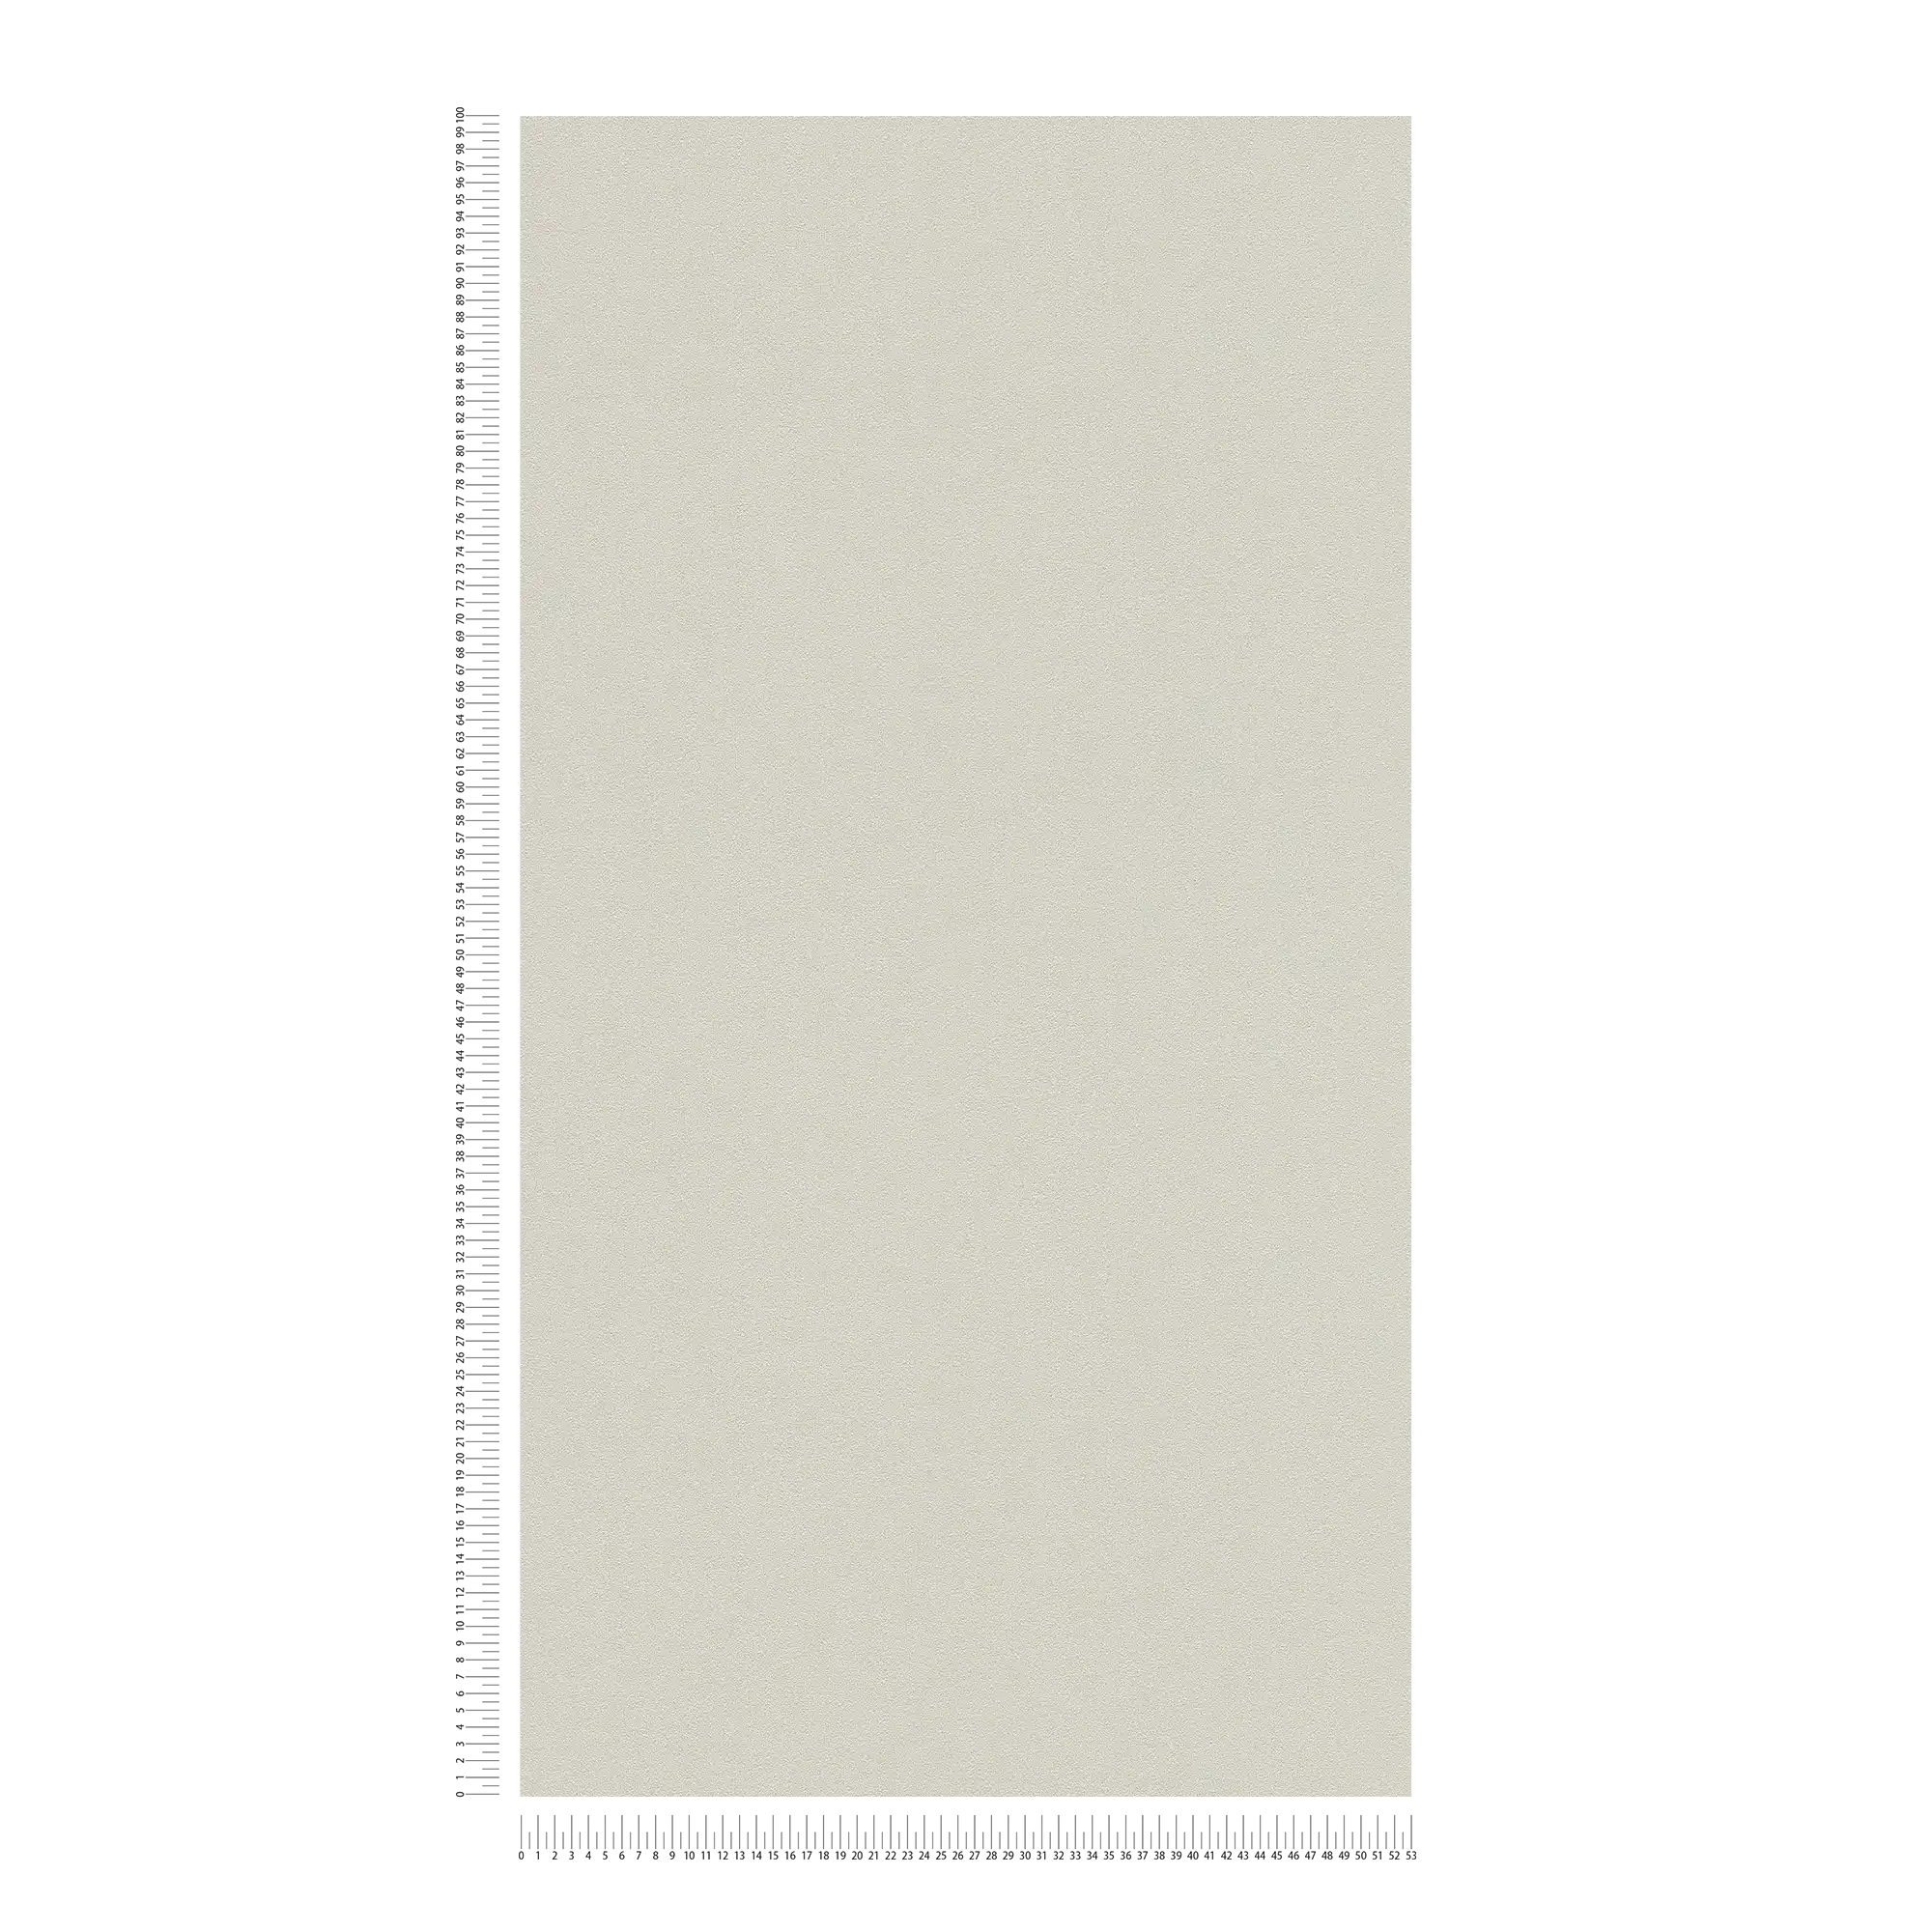             Karl LAGERFELD Carta da parati in tessuto non tessuto tinta unita e texture - grigio
        